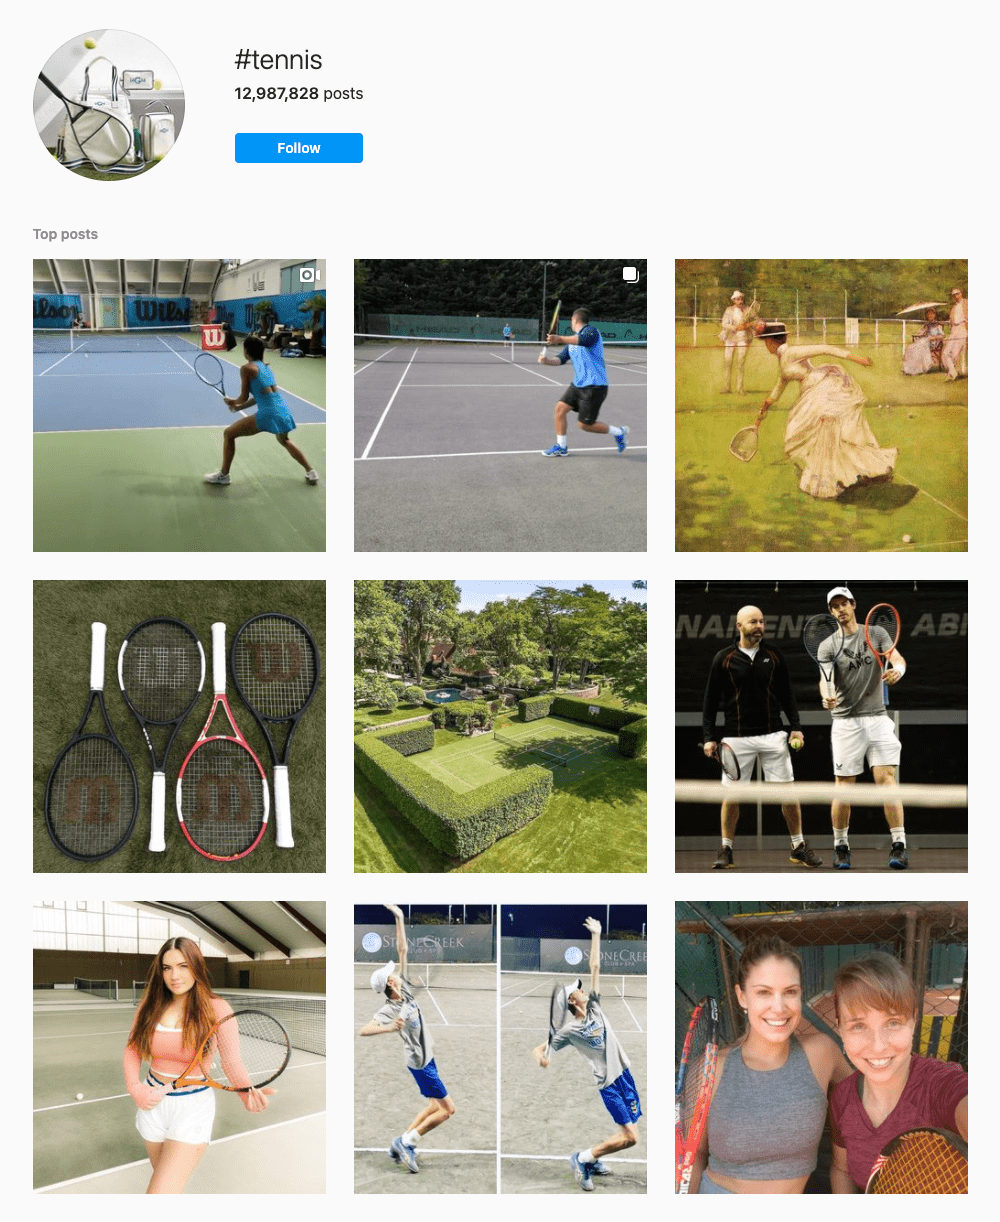 #tennis Hashtags for Instagram